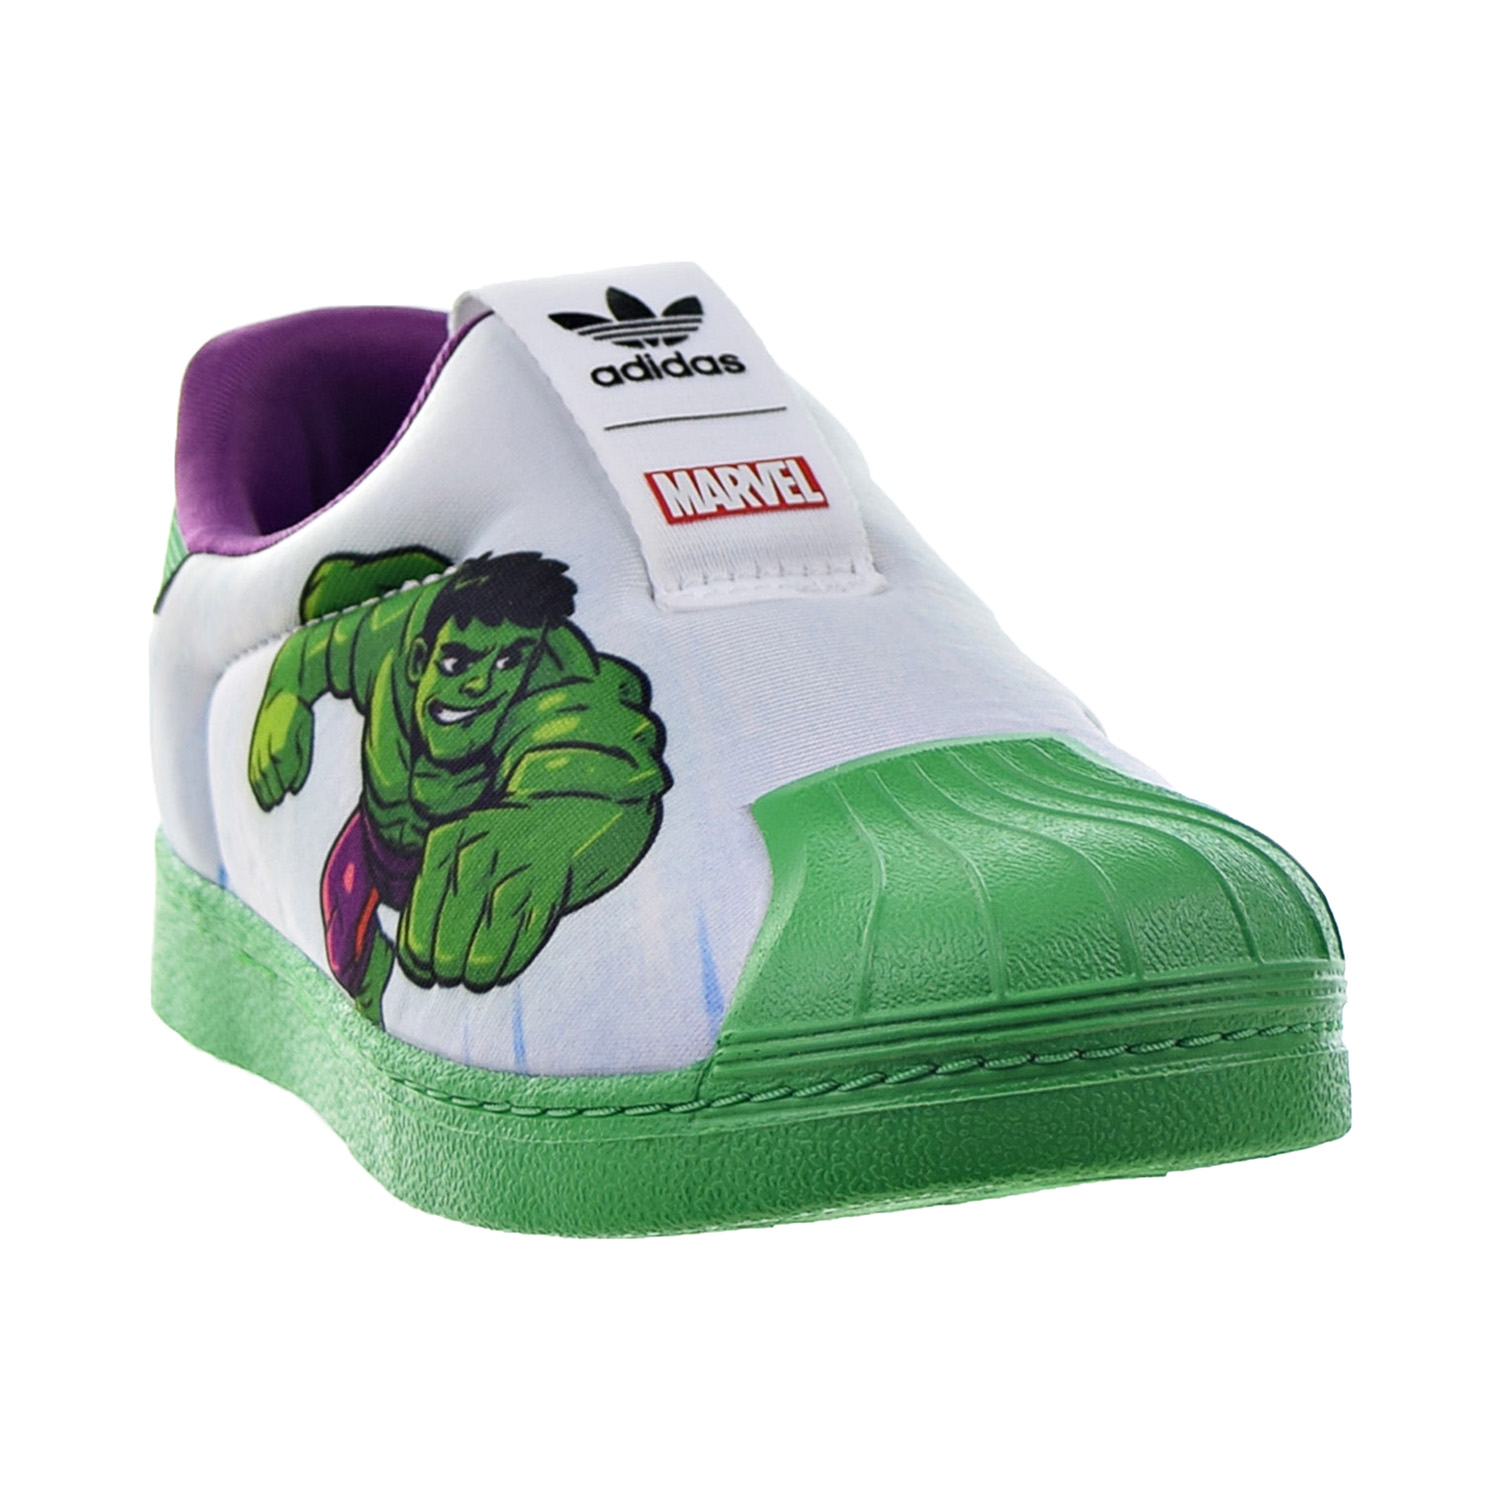 Adidas Superstar 360 I "Marvel Hulk" SlipOn Toddlers